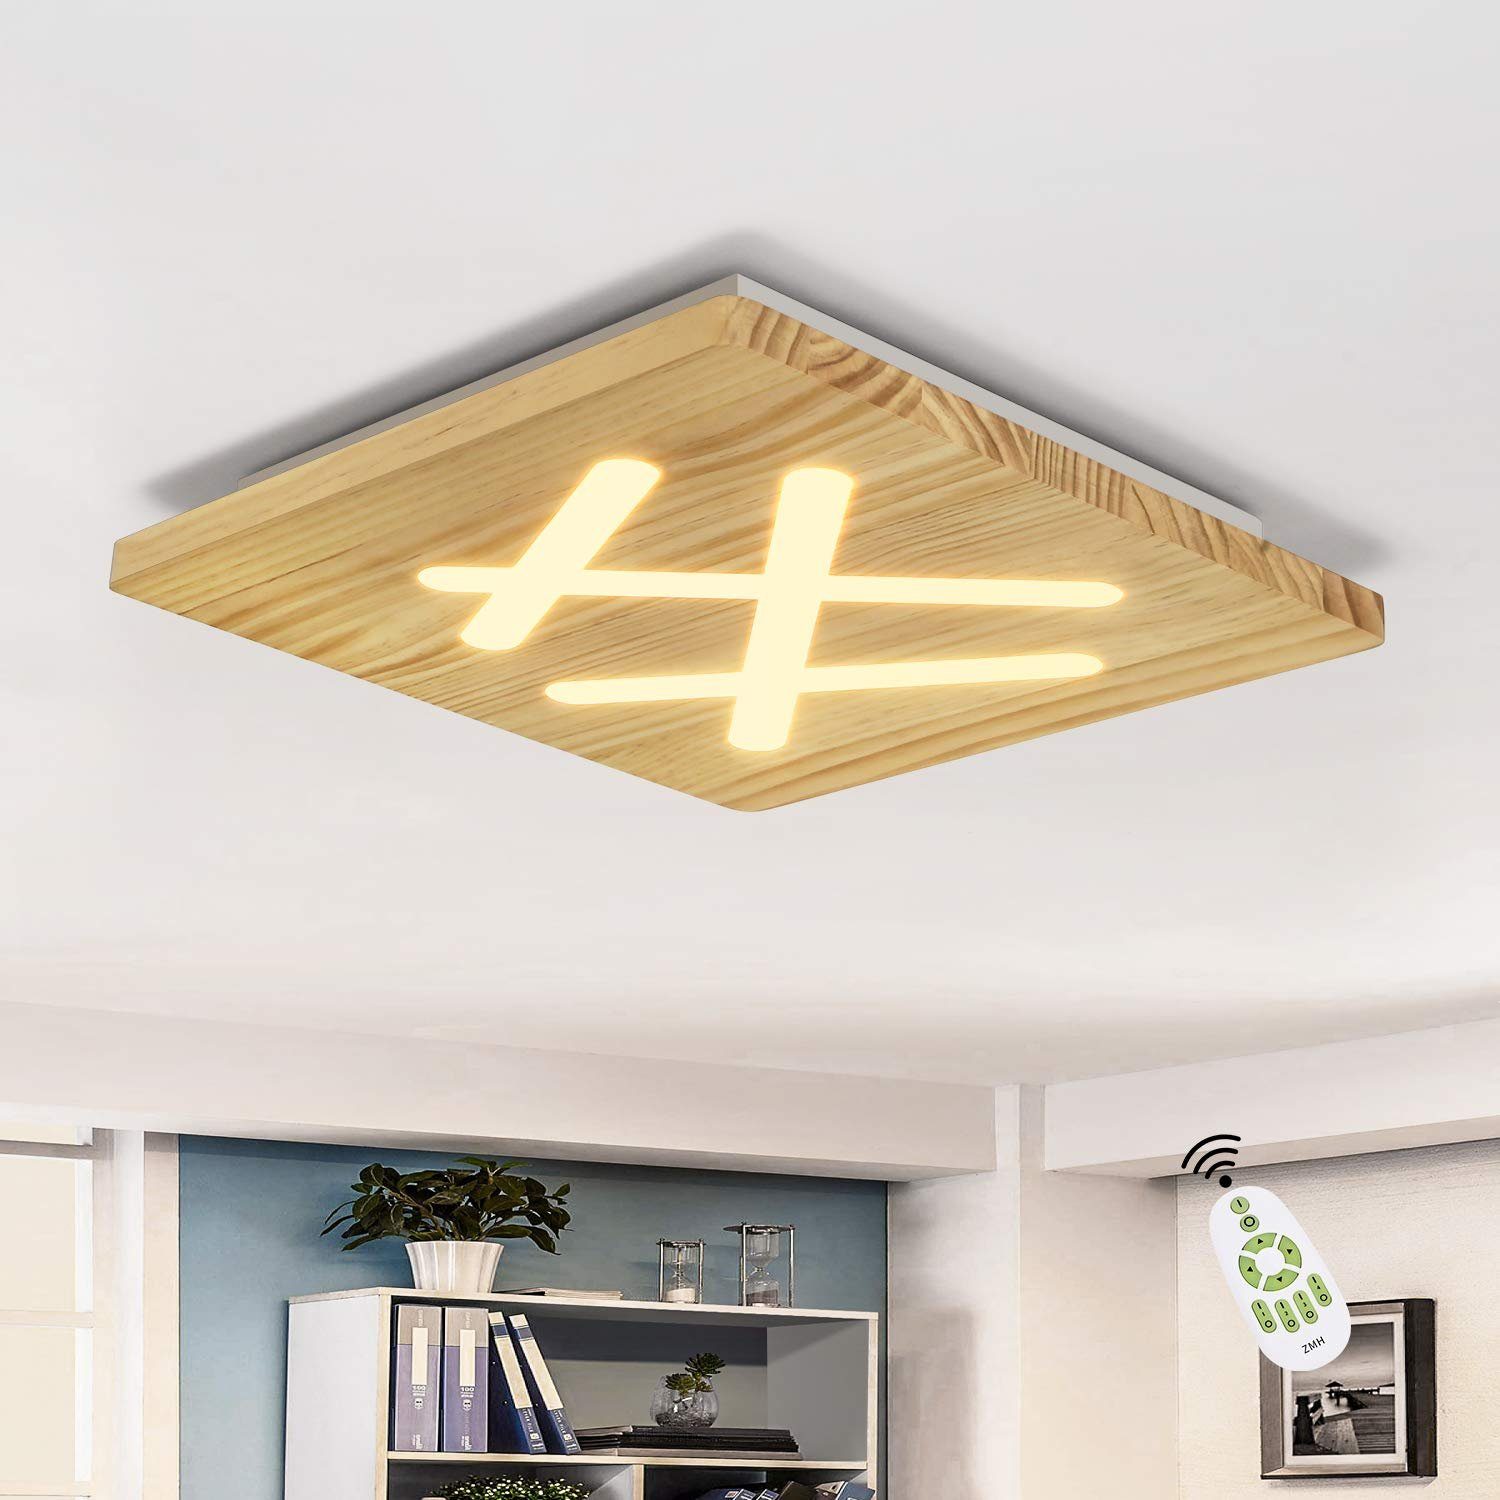 ZMH LED Deckenleuchte Holz Acryl Wohnzimmer 40cm Quadratisch Flurlampe, Dimmer, LED fest integriert